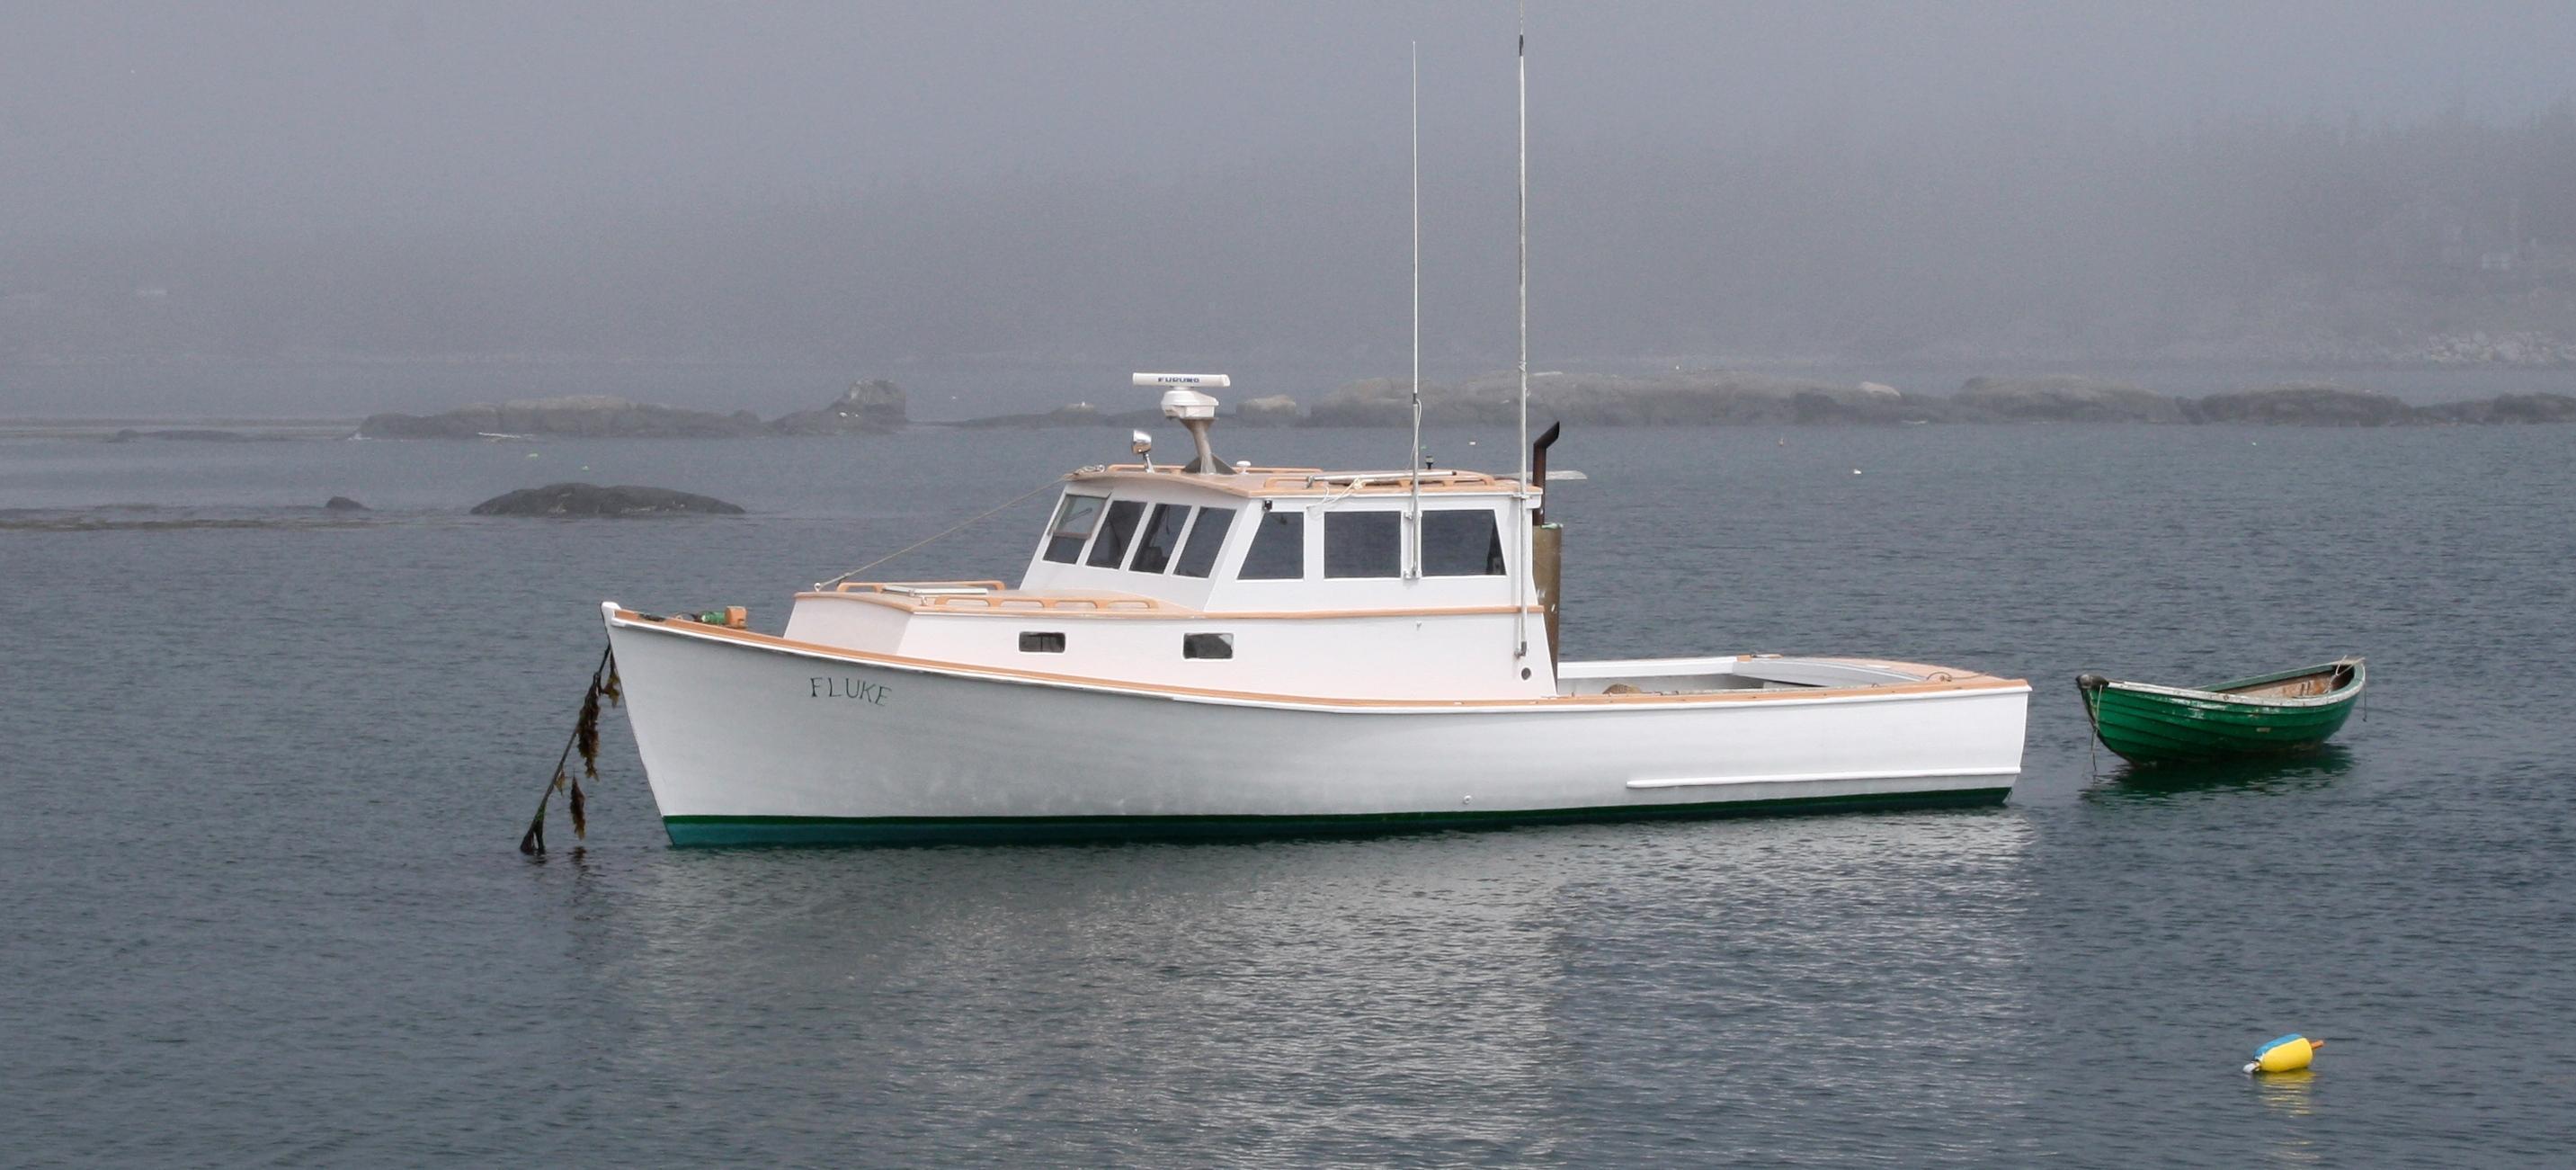 Classic Irving Jones Downeast Lobster Boat - 6 Pack Passenger Boat - Picnic Cruiser, Vinalhaven Island